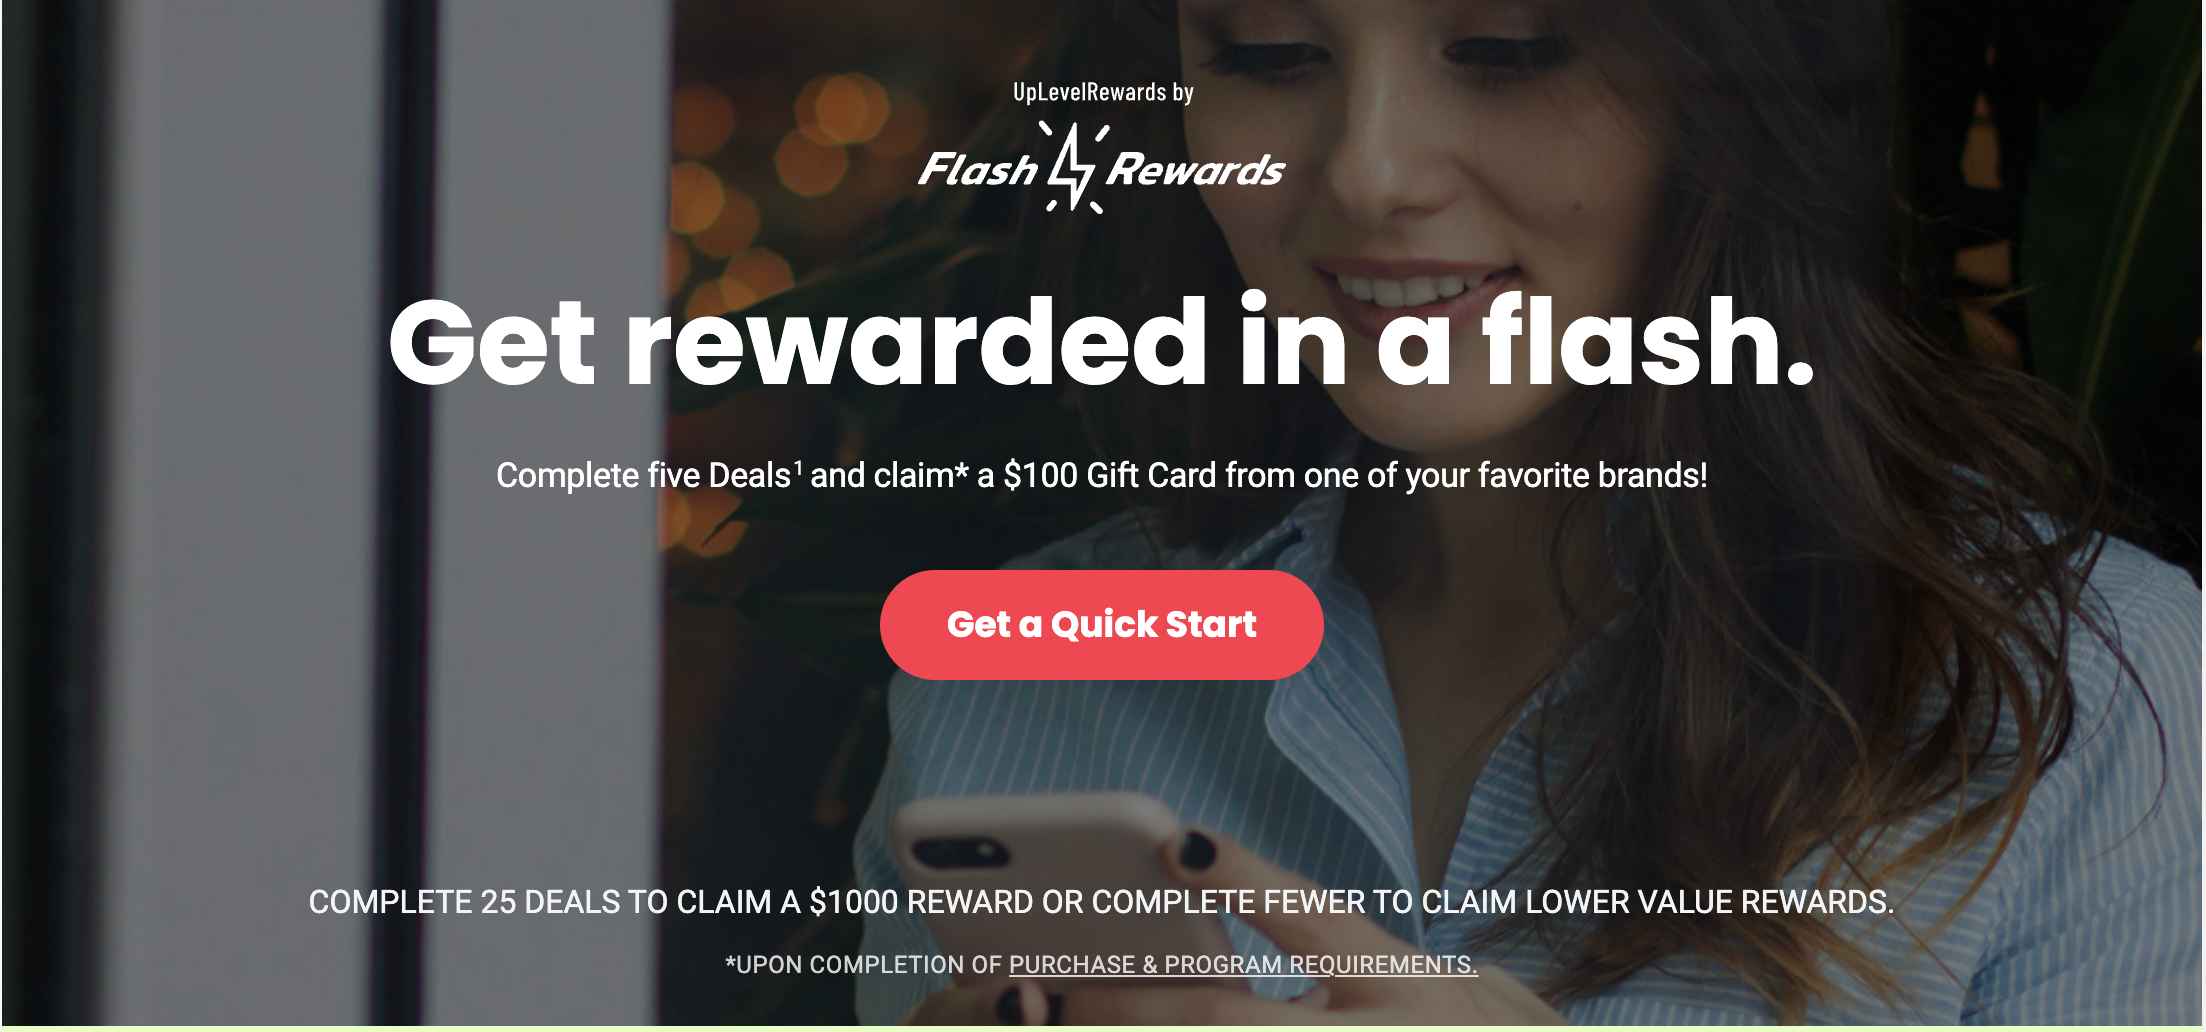 Is Flash Rewards Legit